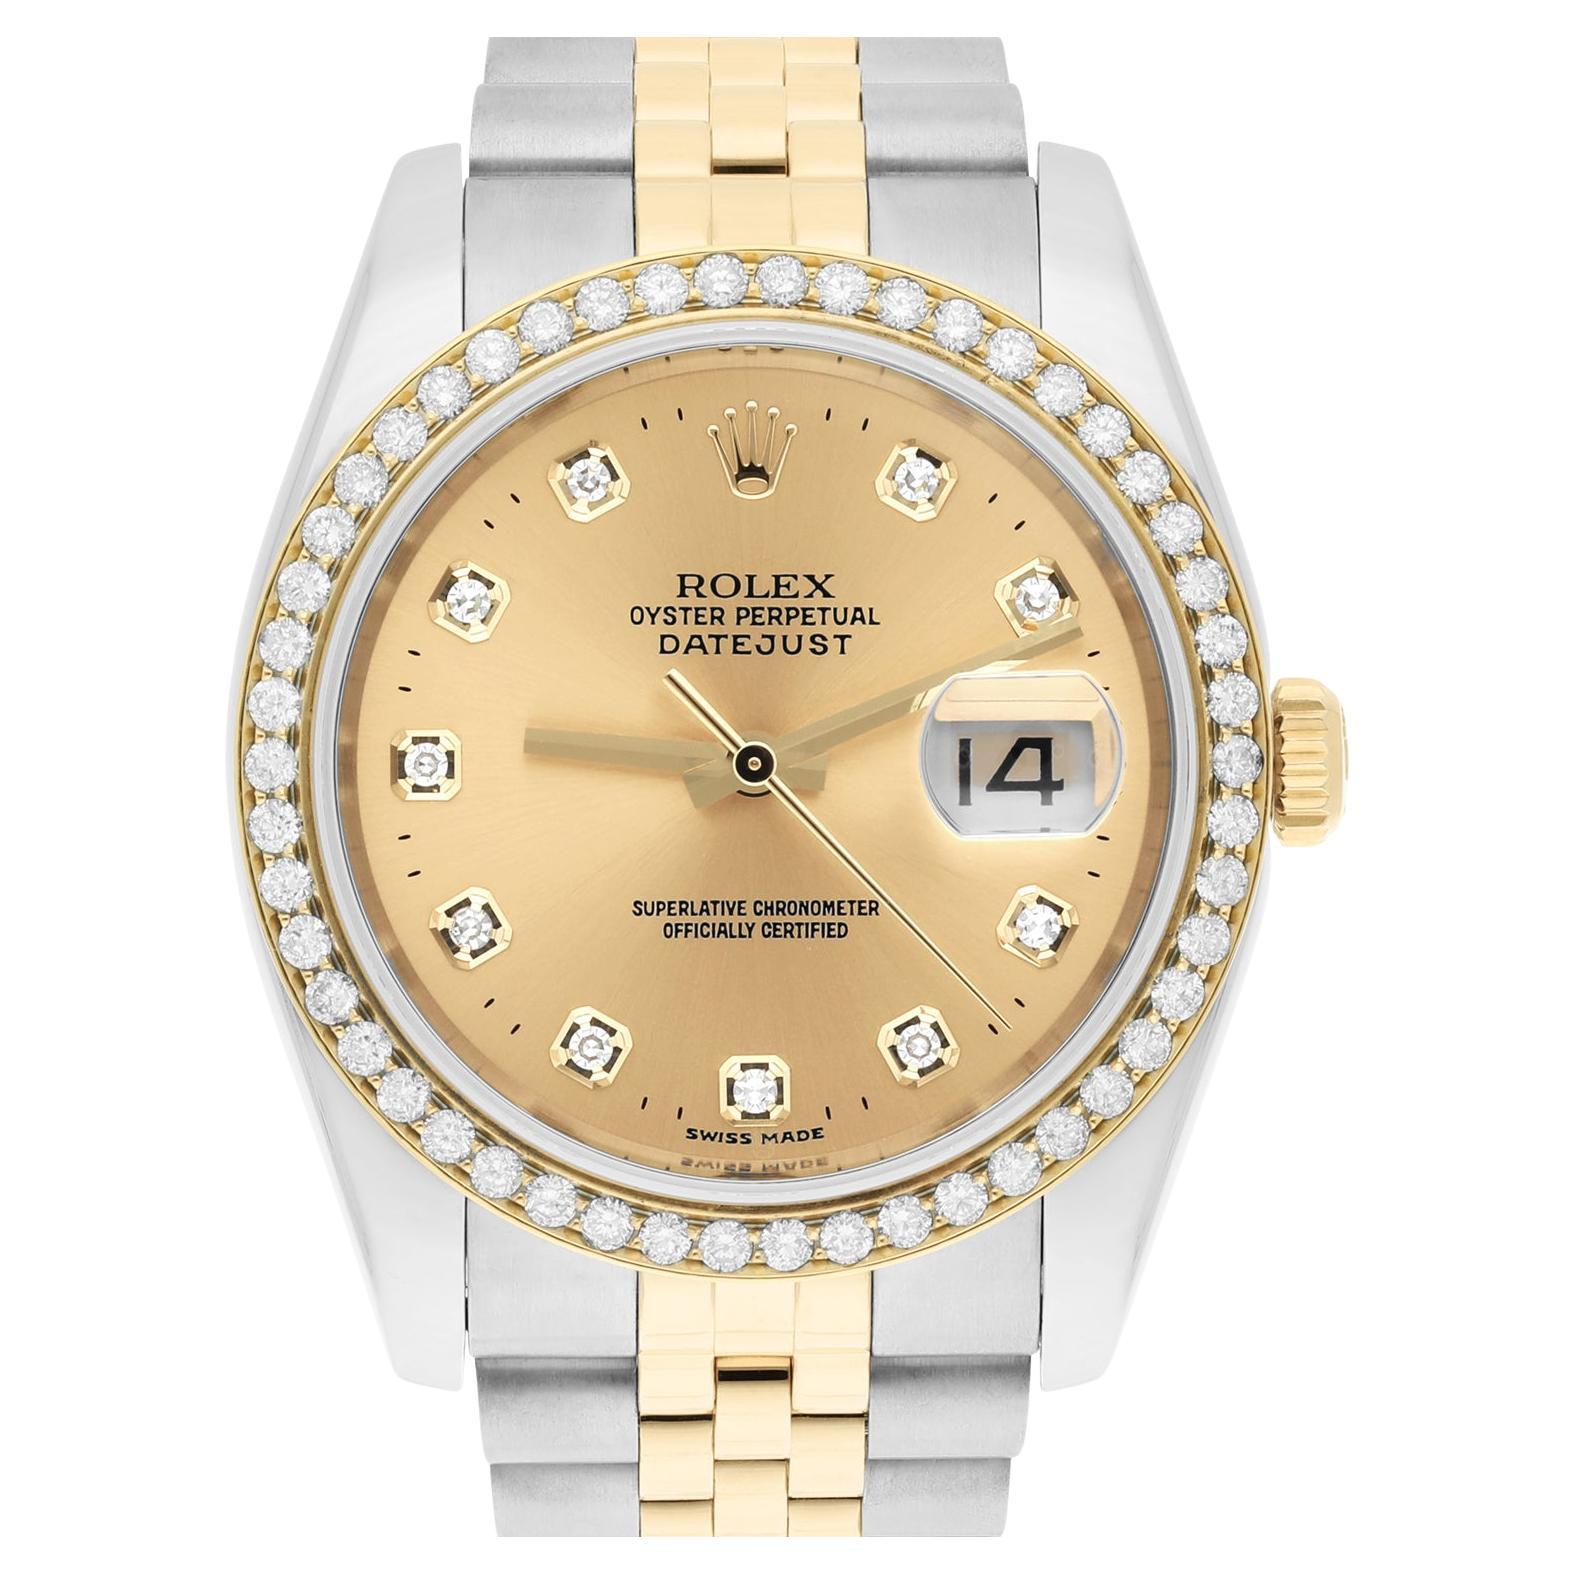 Reloj Rolex Datejust 36 Oro y Acero 116233 Reloj Jubilee Esfera Champán